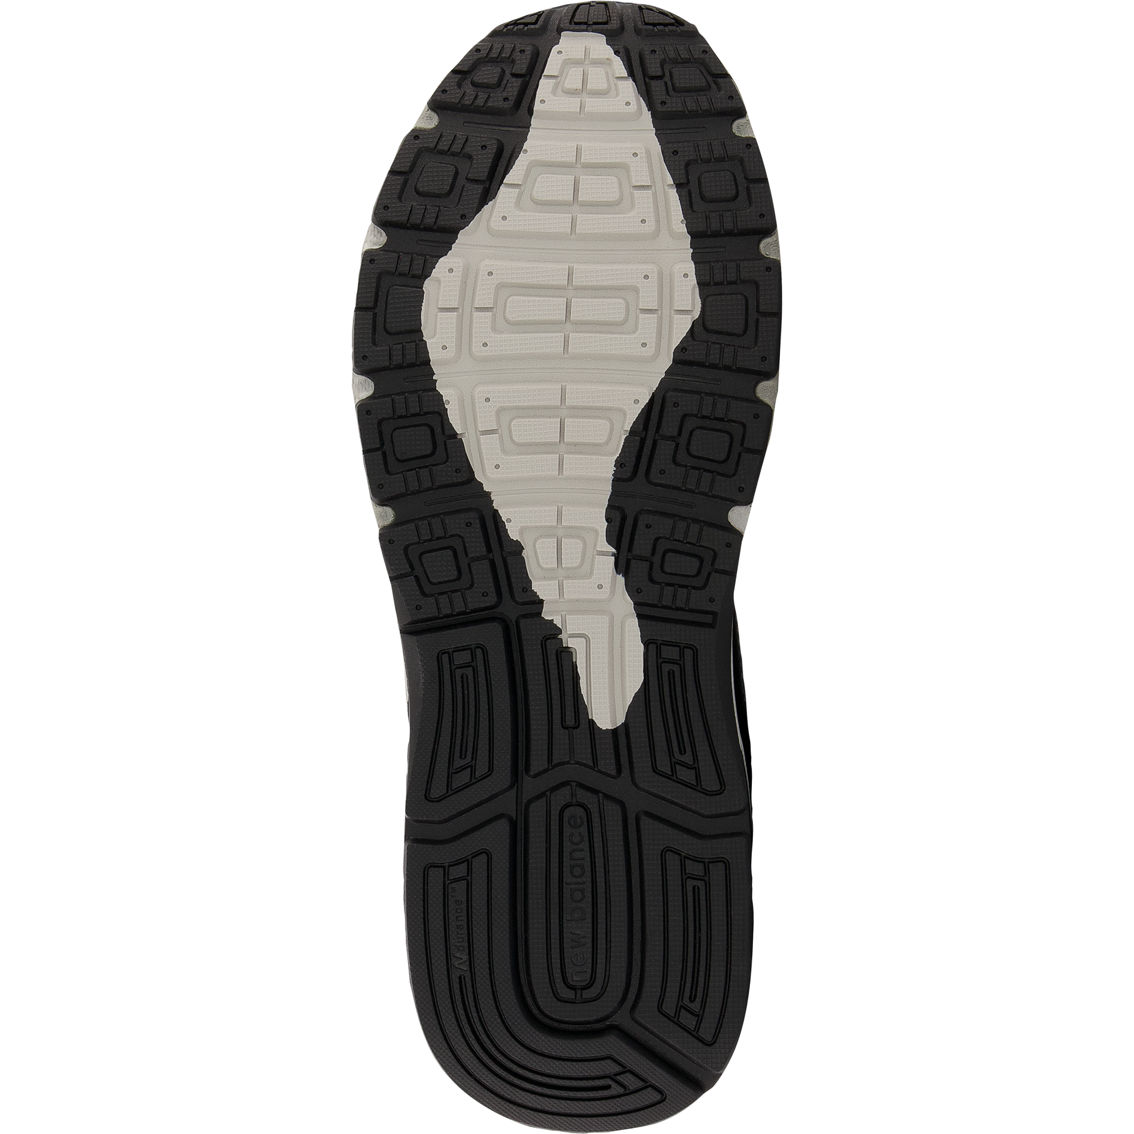 New Balance Men's 1540v3 Running Shoes - Image 4 of 4